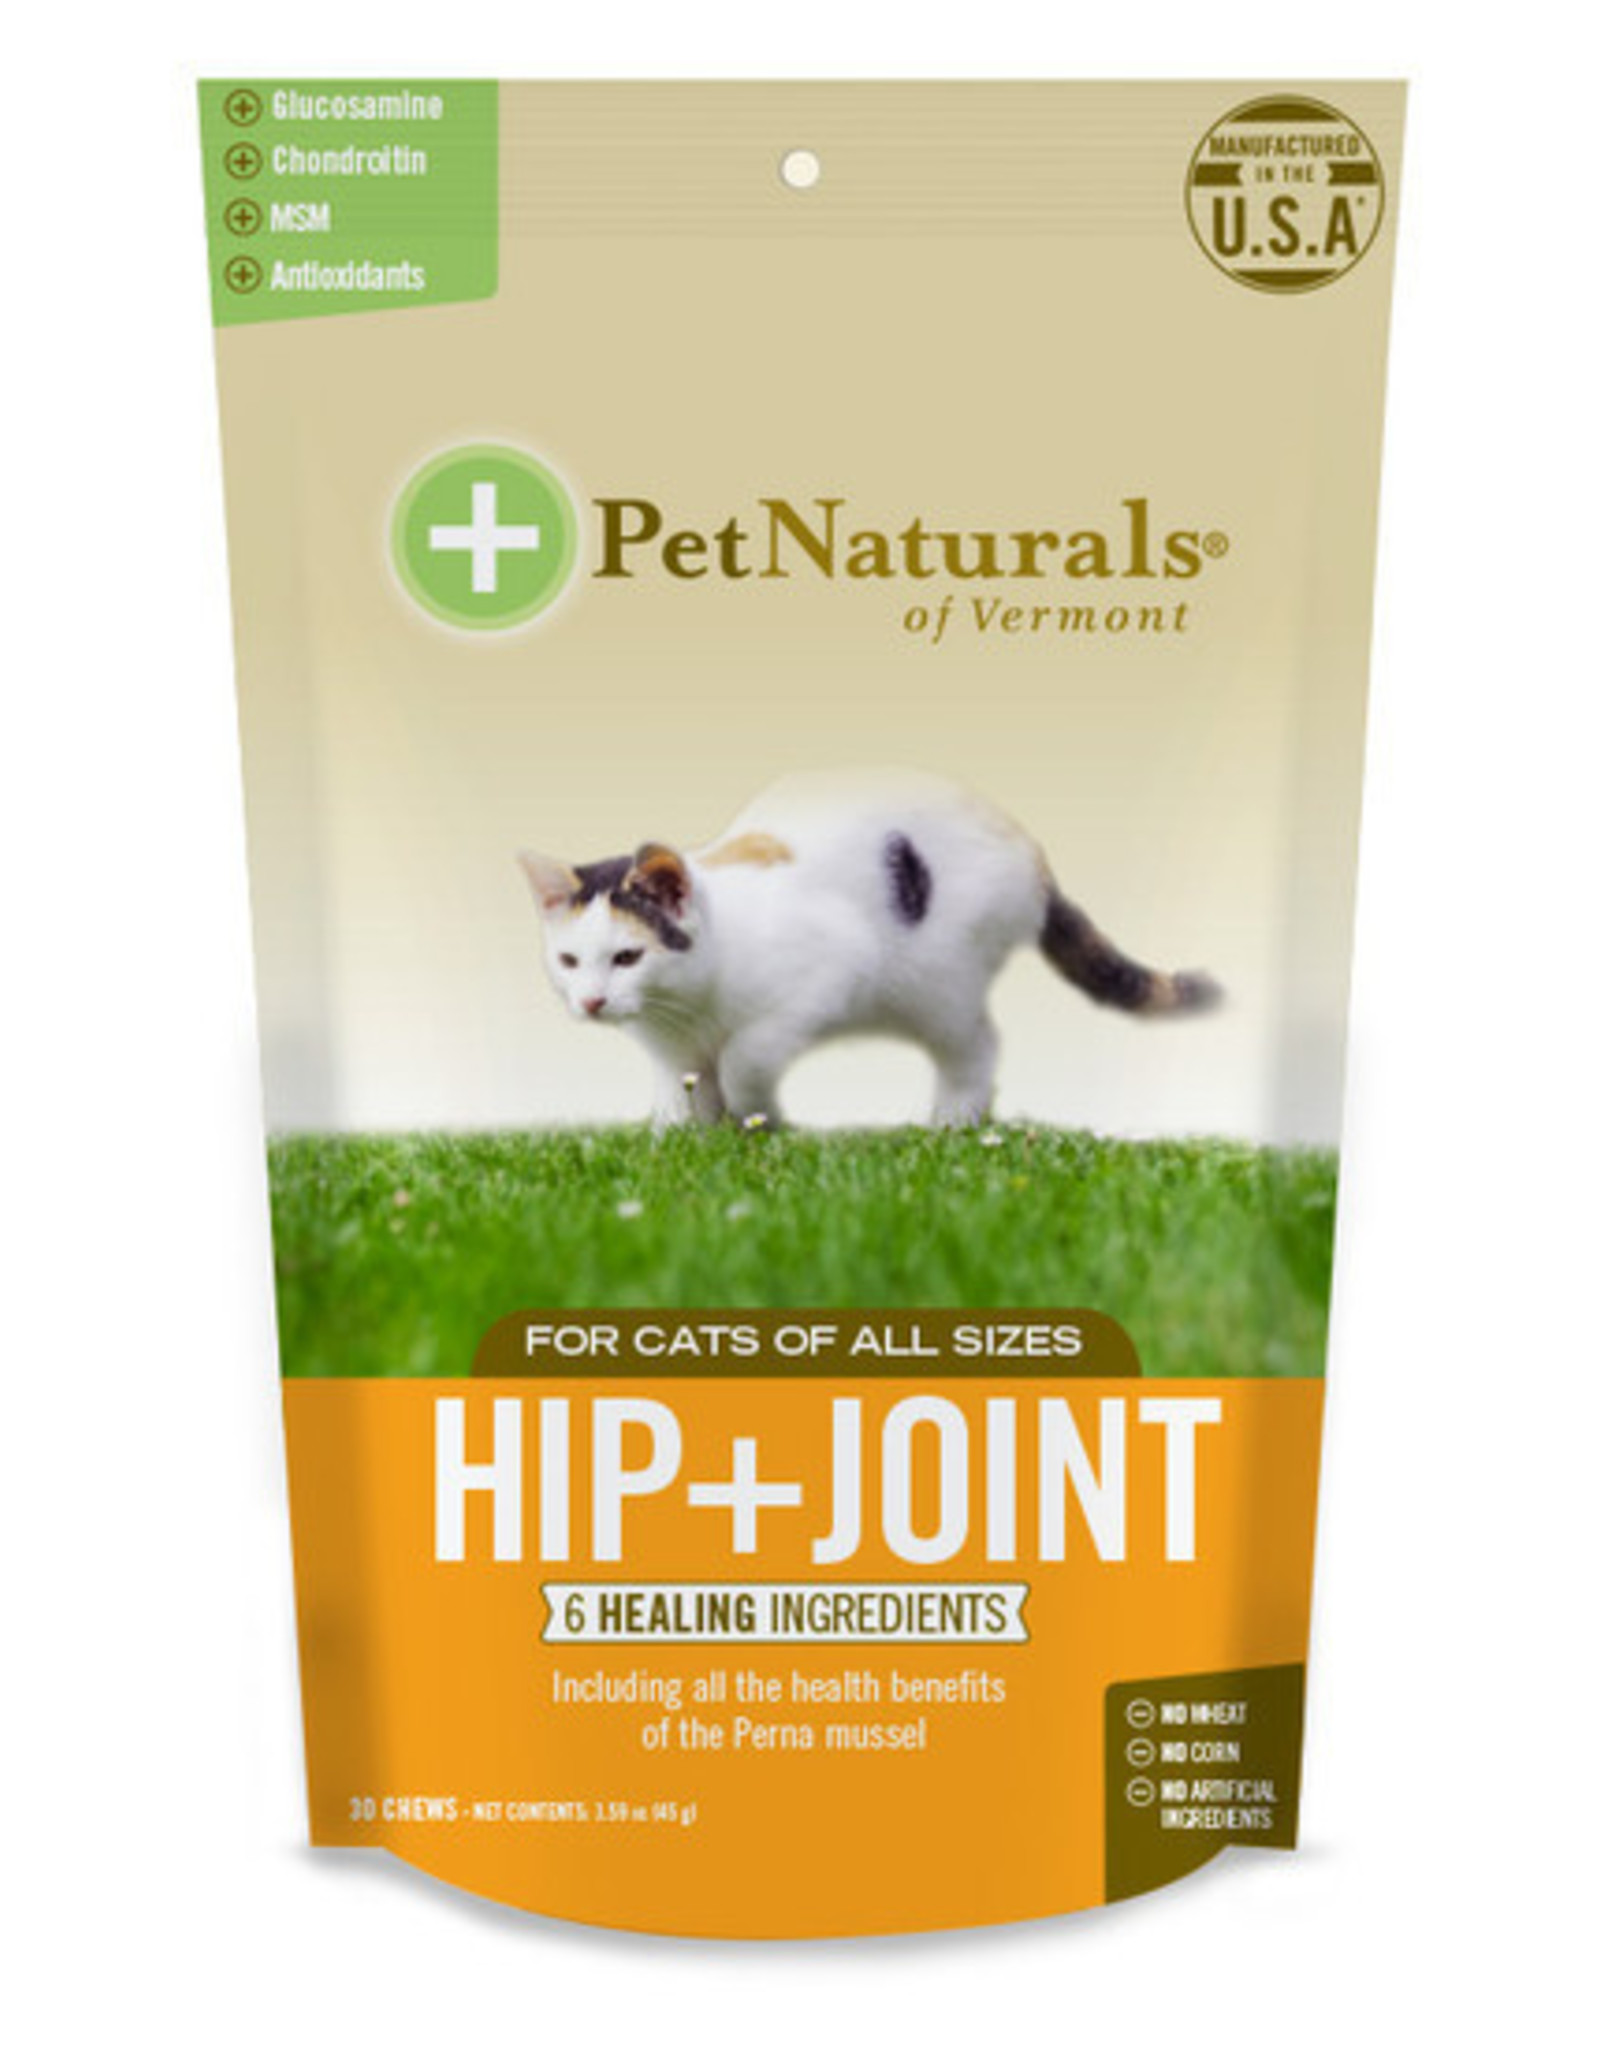 Pet Naturals Pet Naturals of Vermont Cat Hip + Joint 30ct